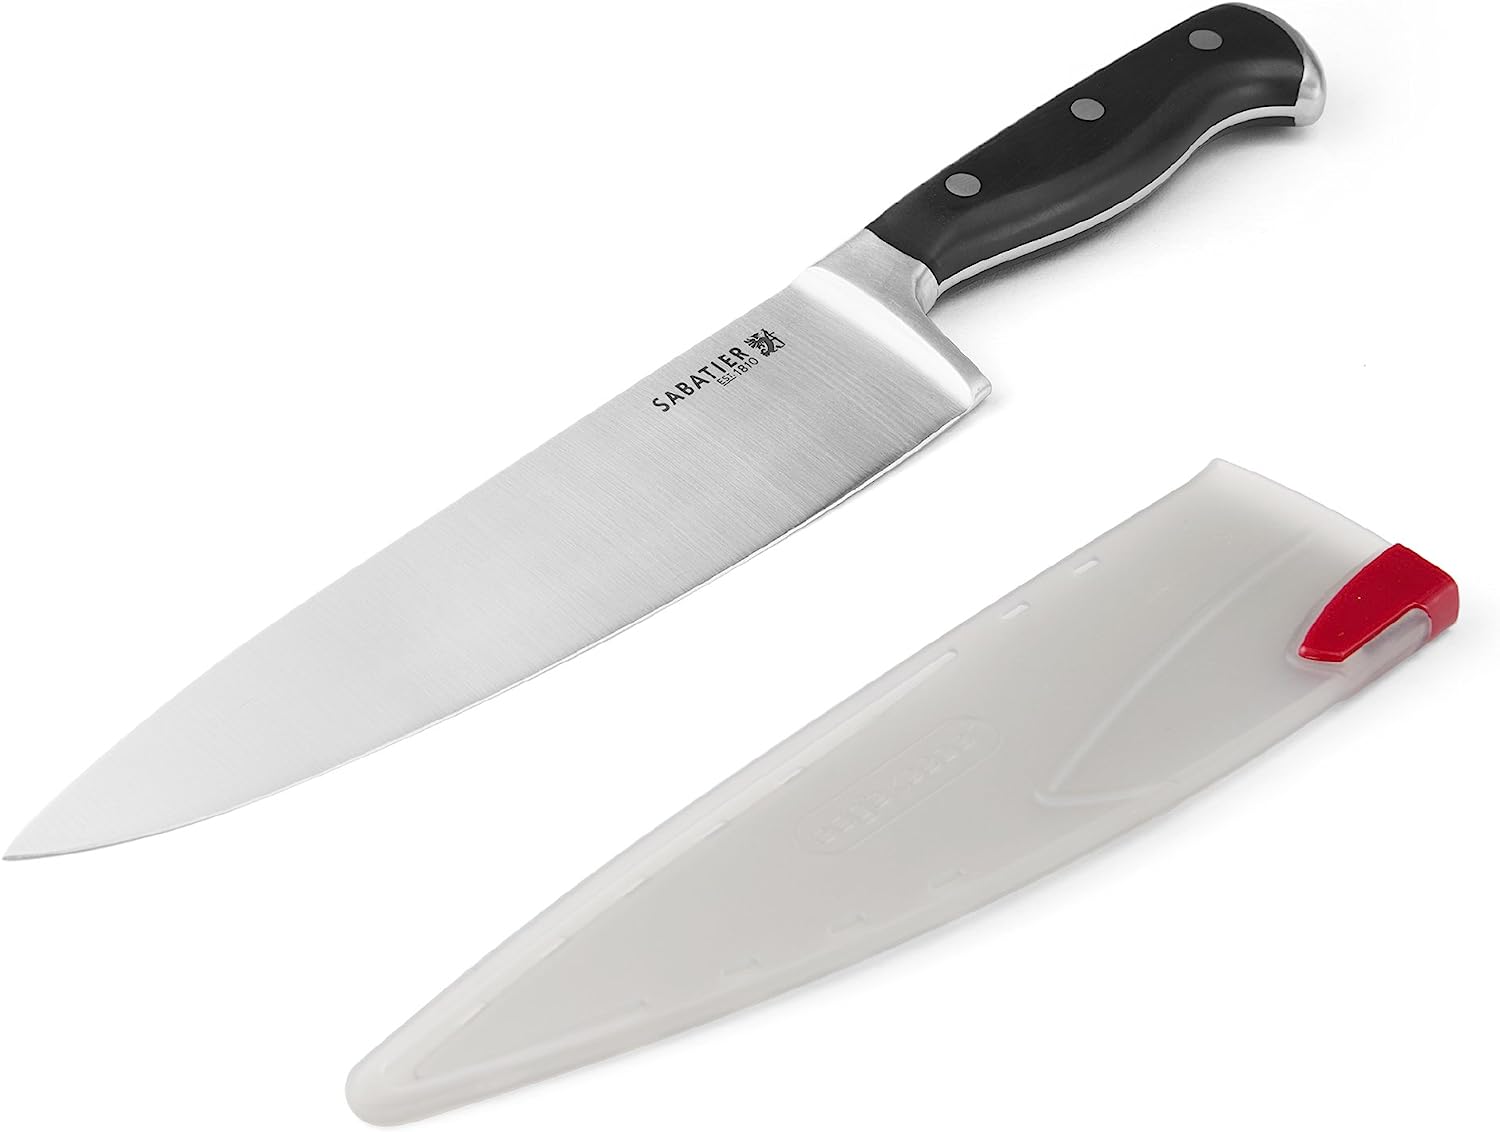 Sabatier Chef Knife Review